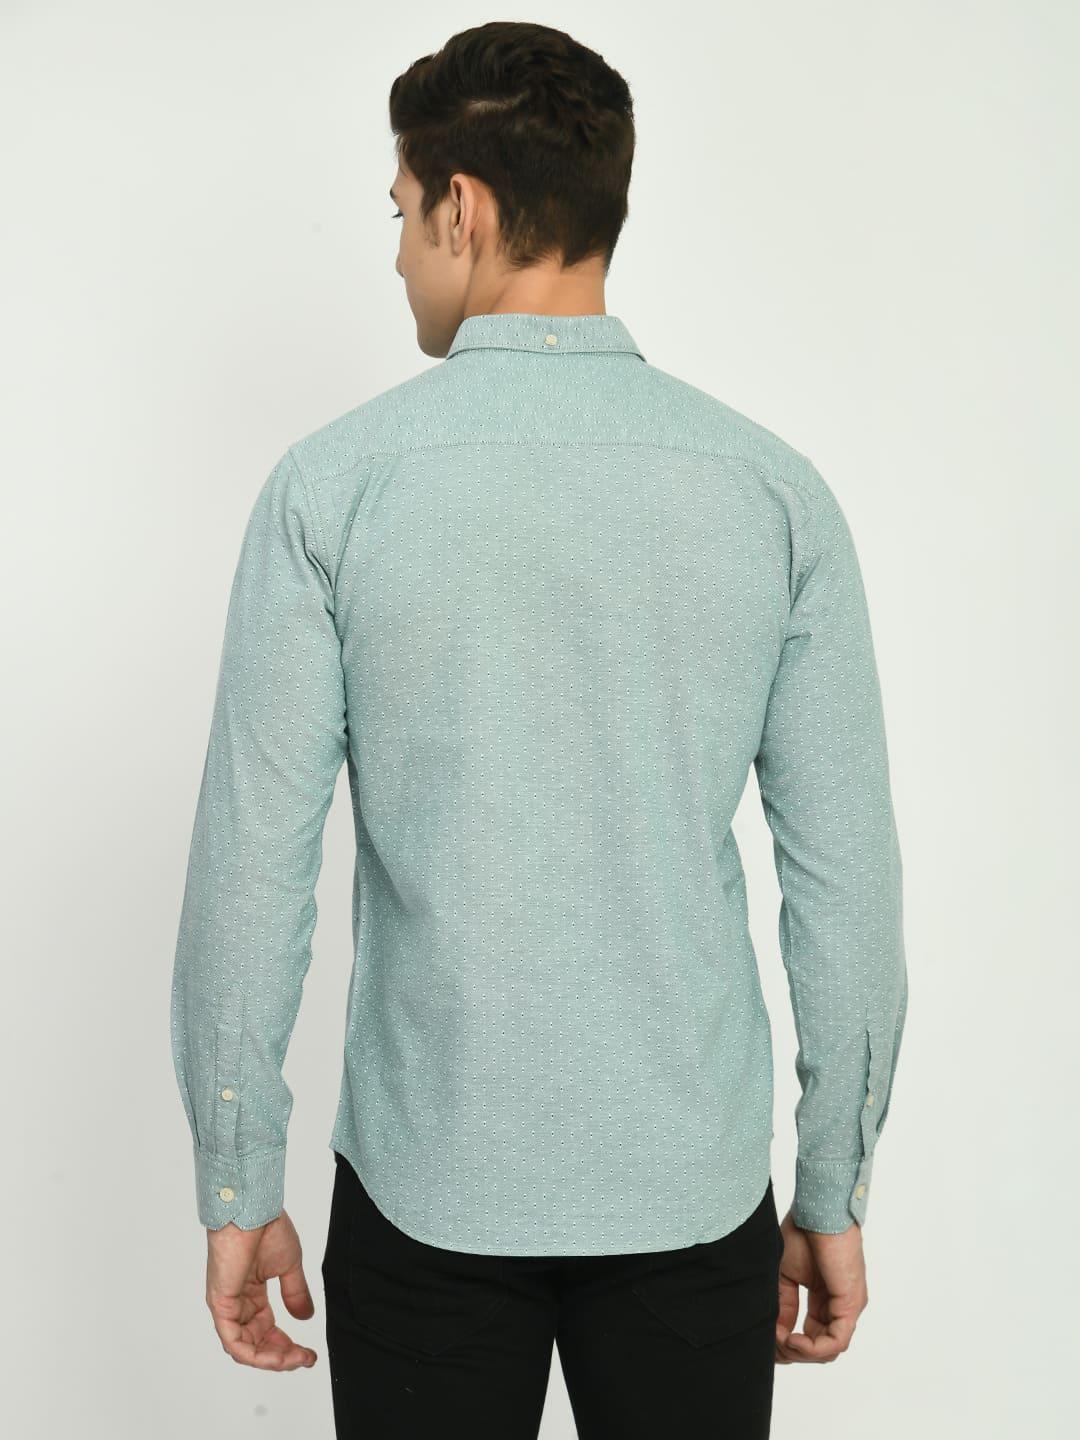 Men's Printed Cotton Regular Fit Shirt